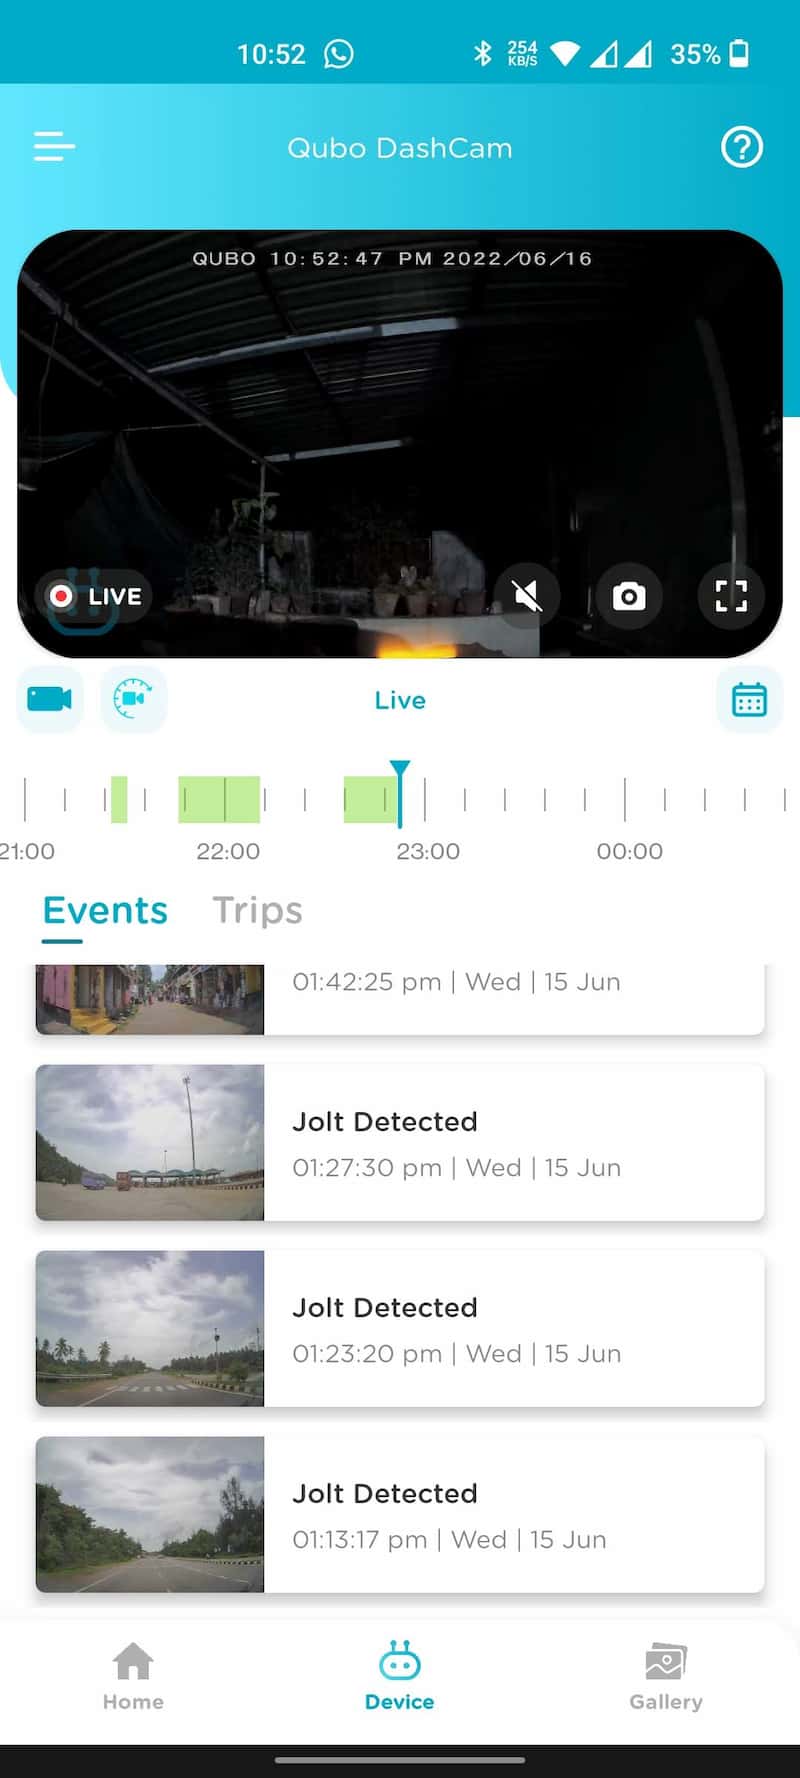 Qubo Dashcam Pro 4K Events